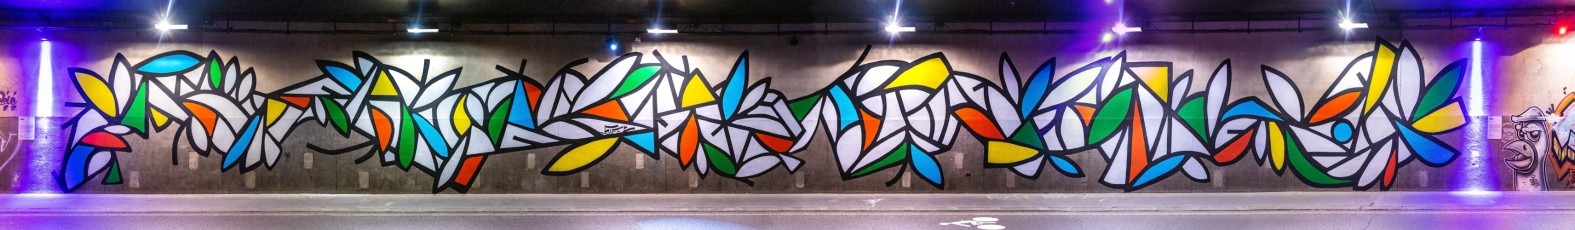 Sifat - Tunnel des Tuileries - l’art urbain en bord de Seine - Août 2022